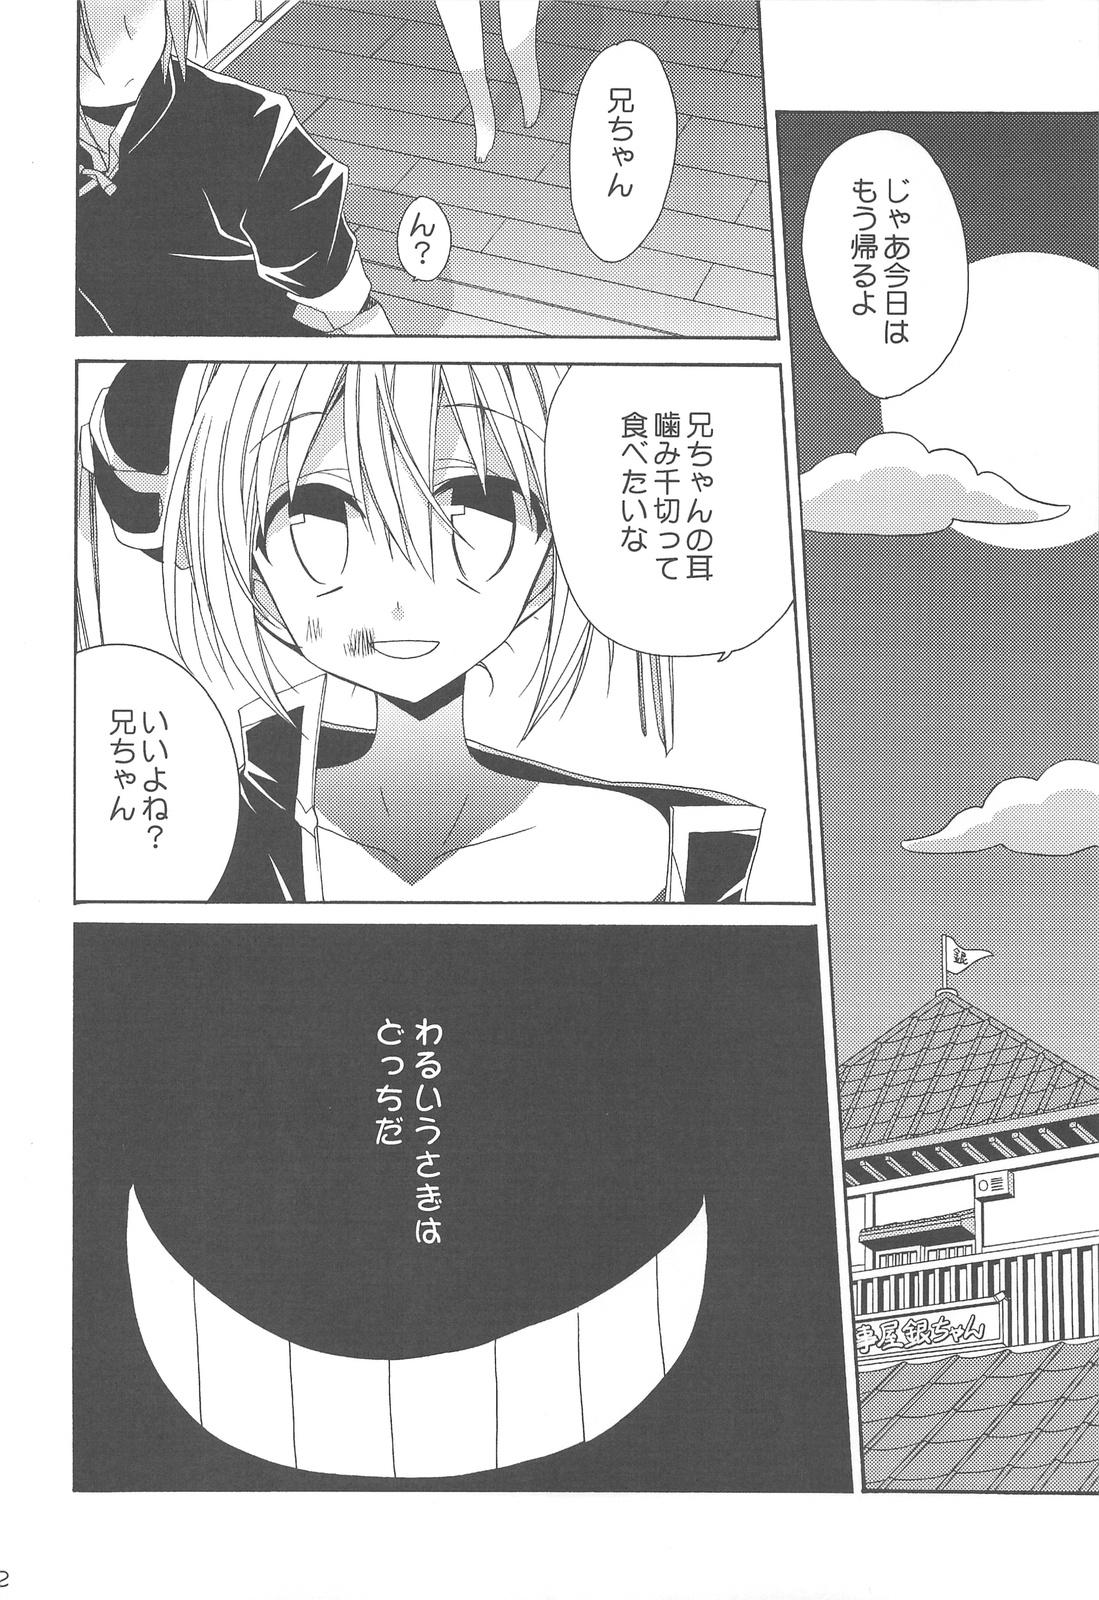 Flashing heroine syndrome - Gintama Classroom - Page 11